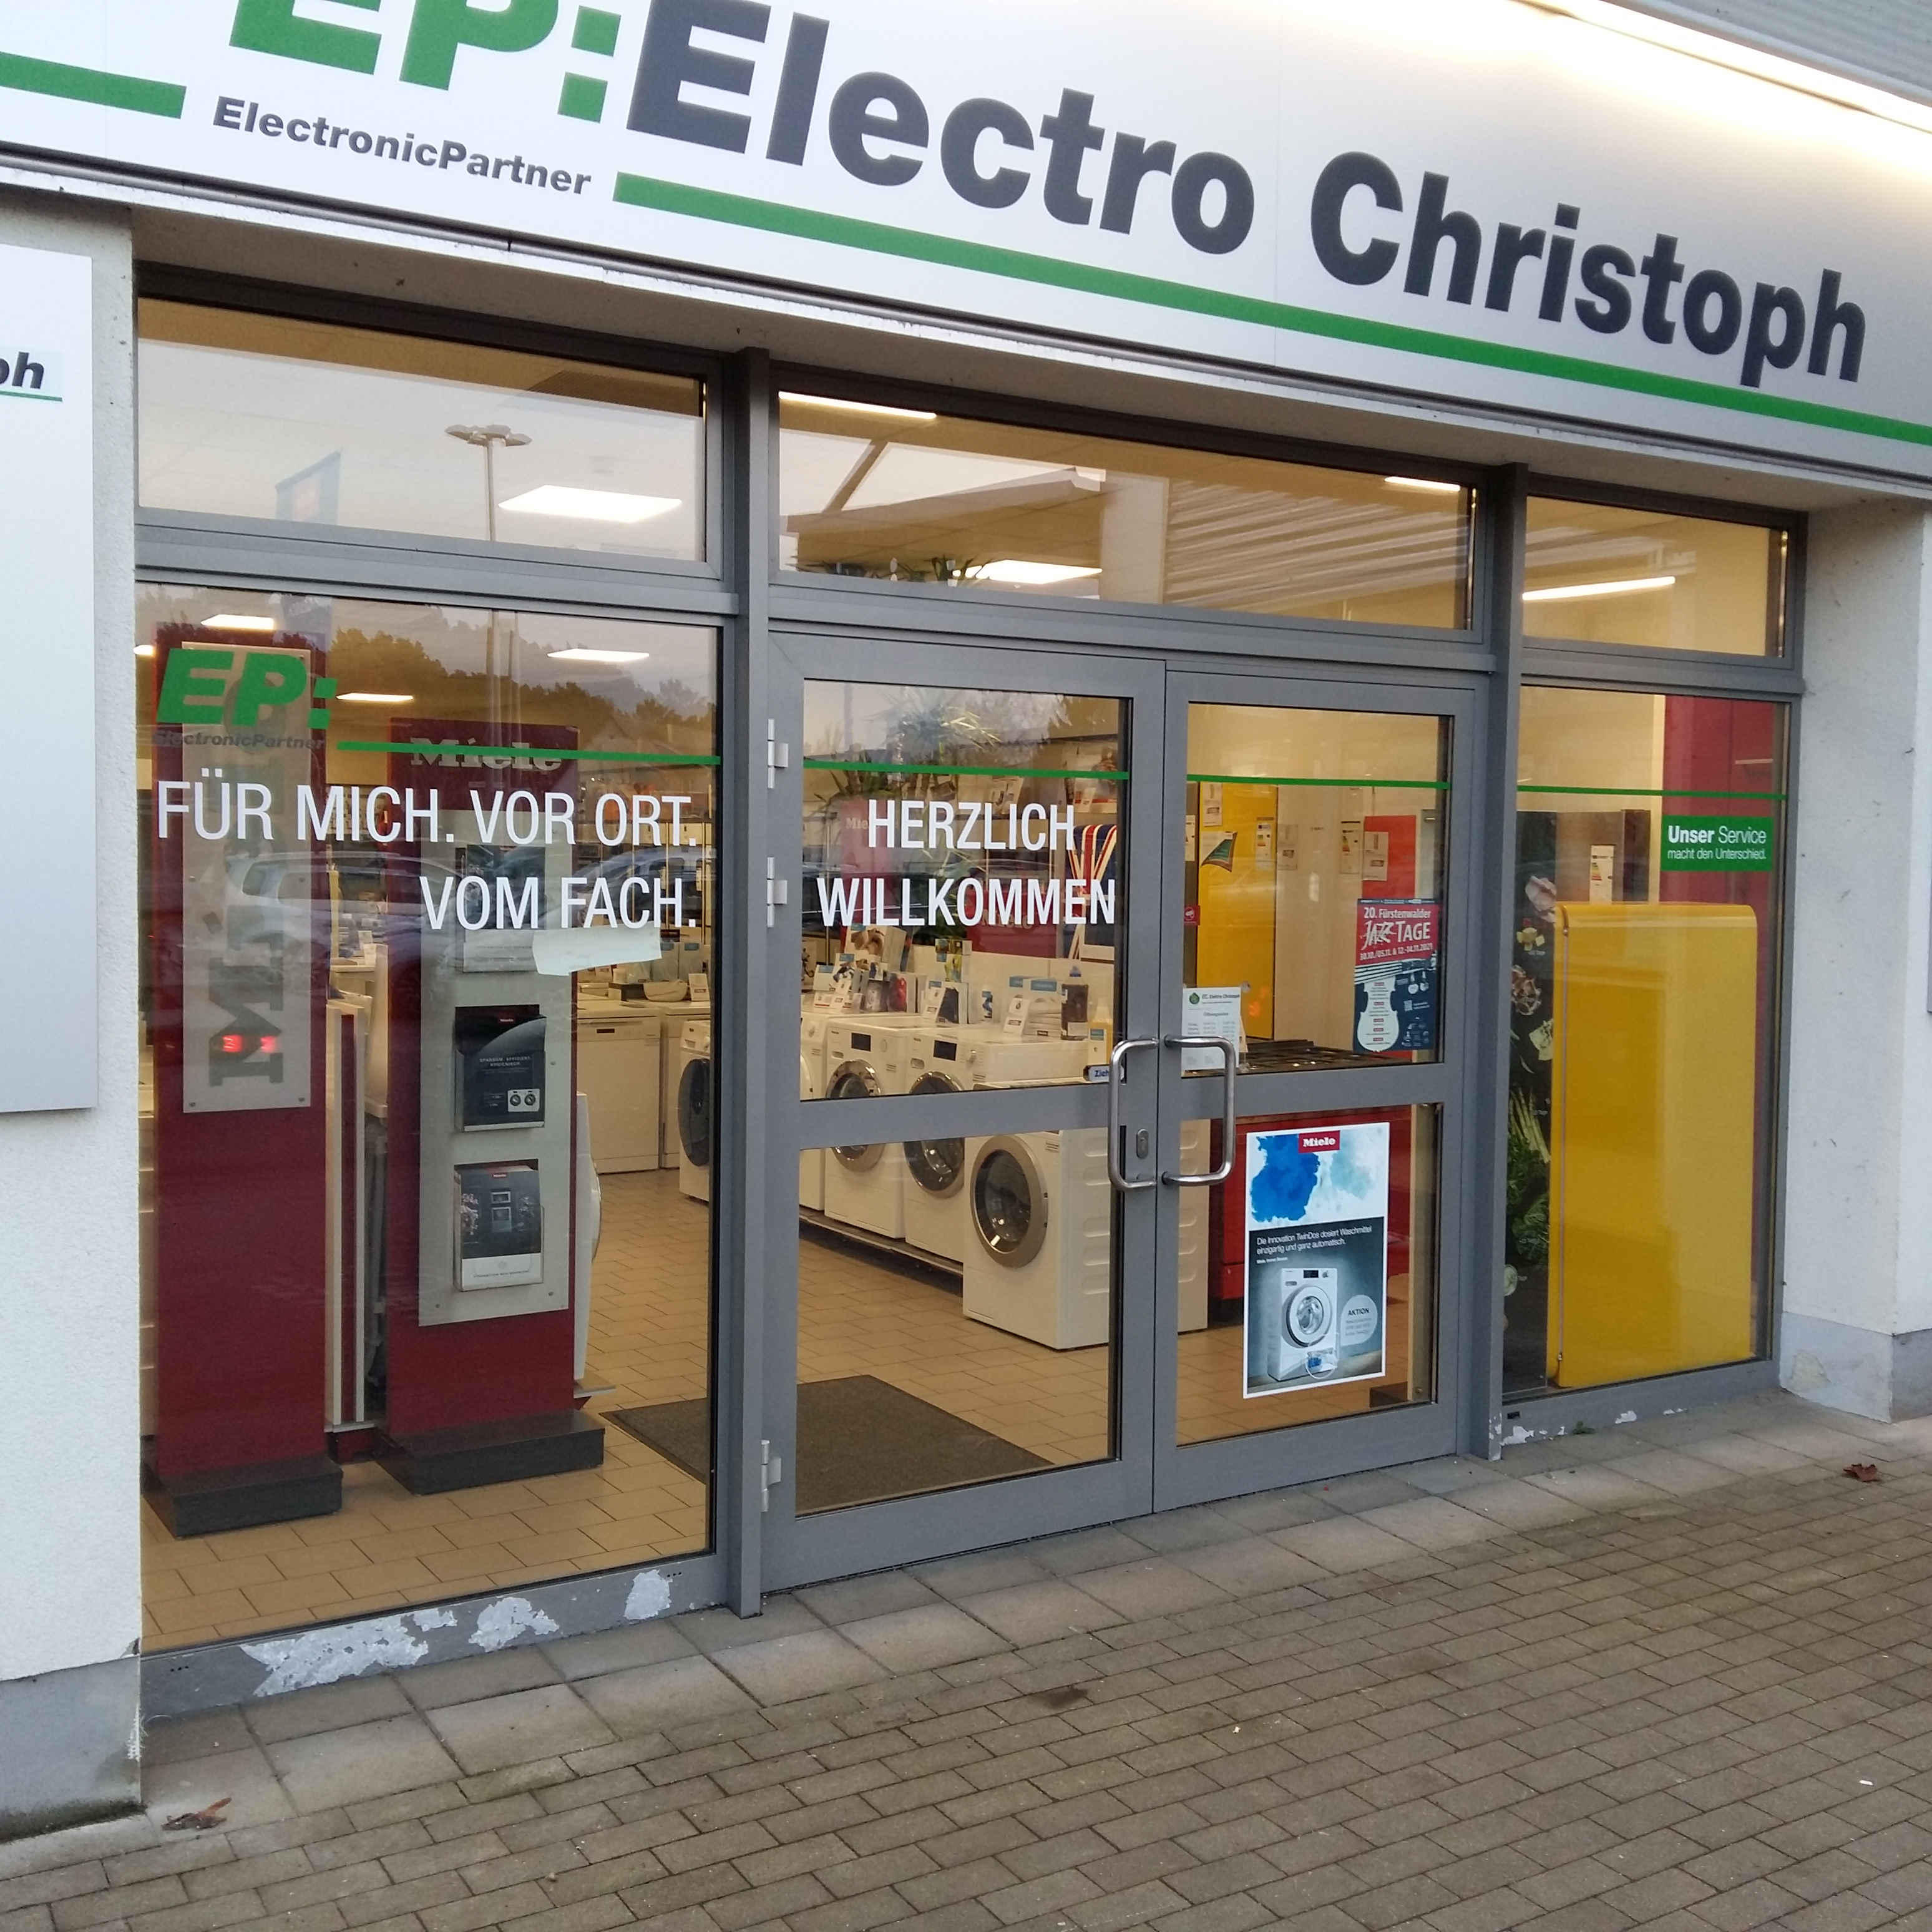 EP: Electro Christoph